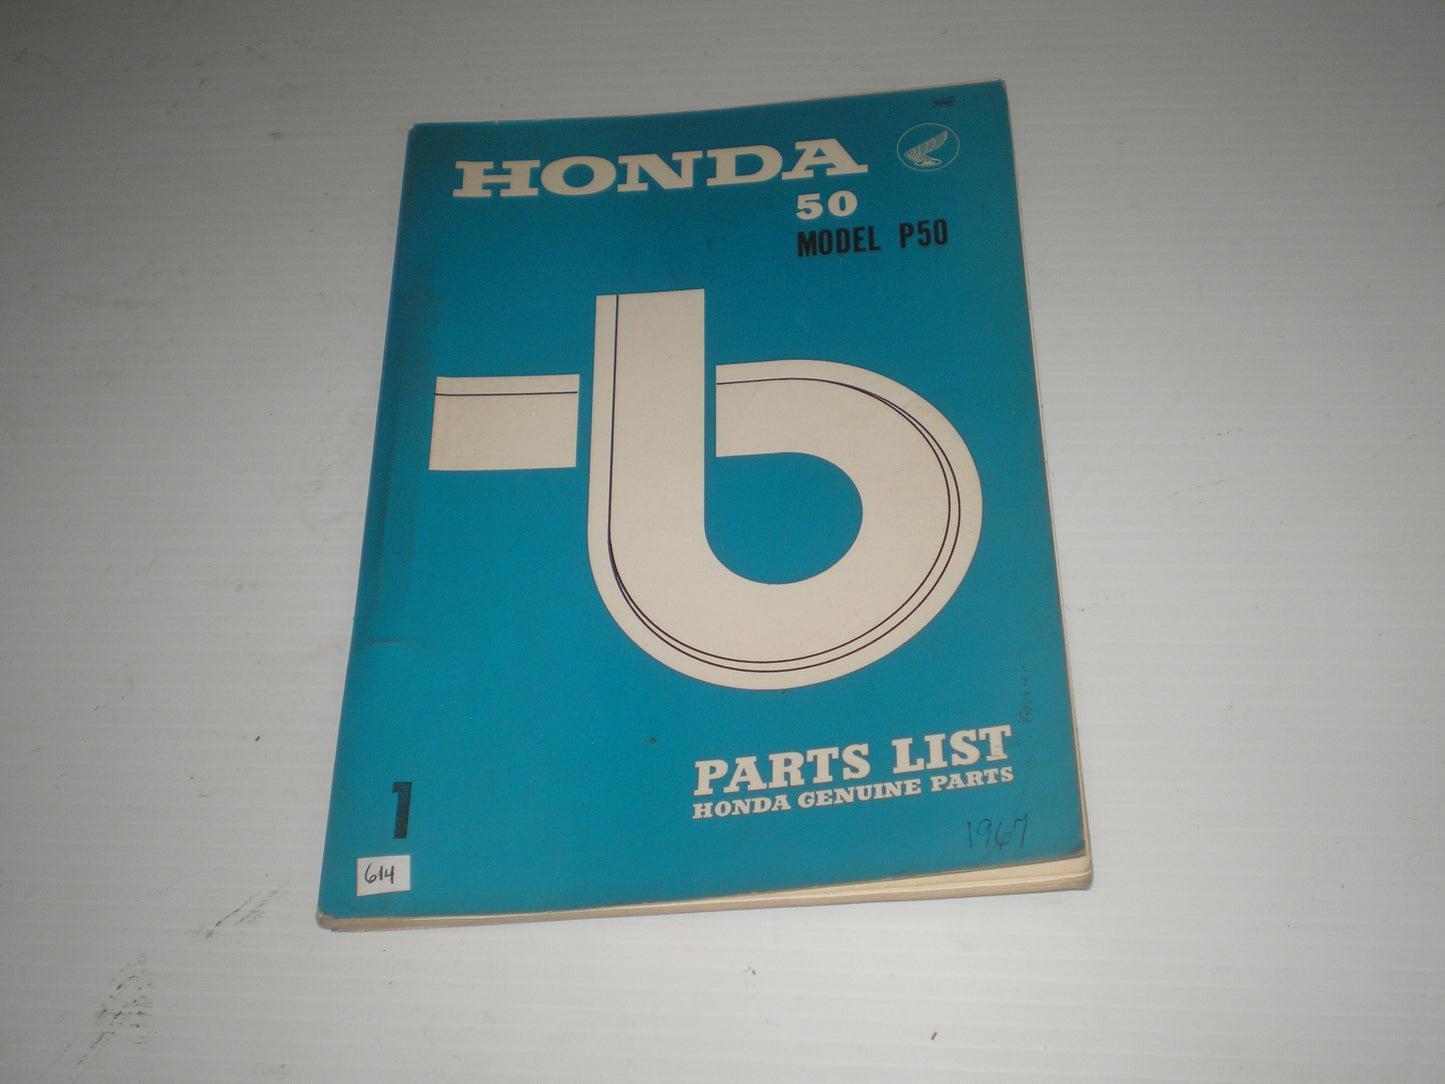 HONDA 50 Model P50  The Little Moped 1968  Factory Parts List  #614